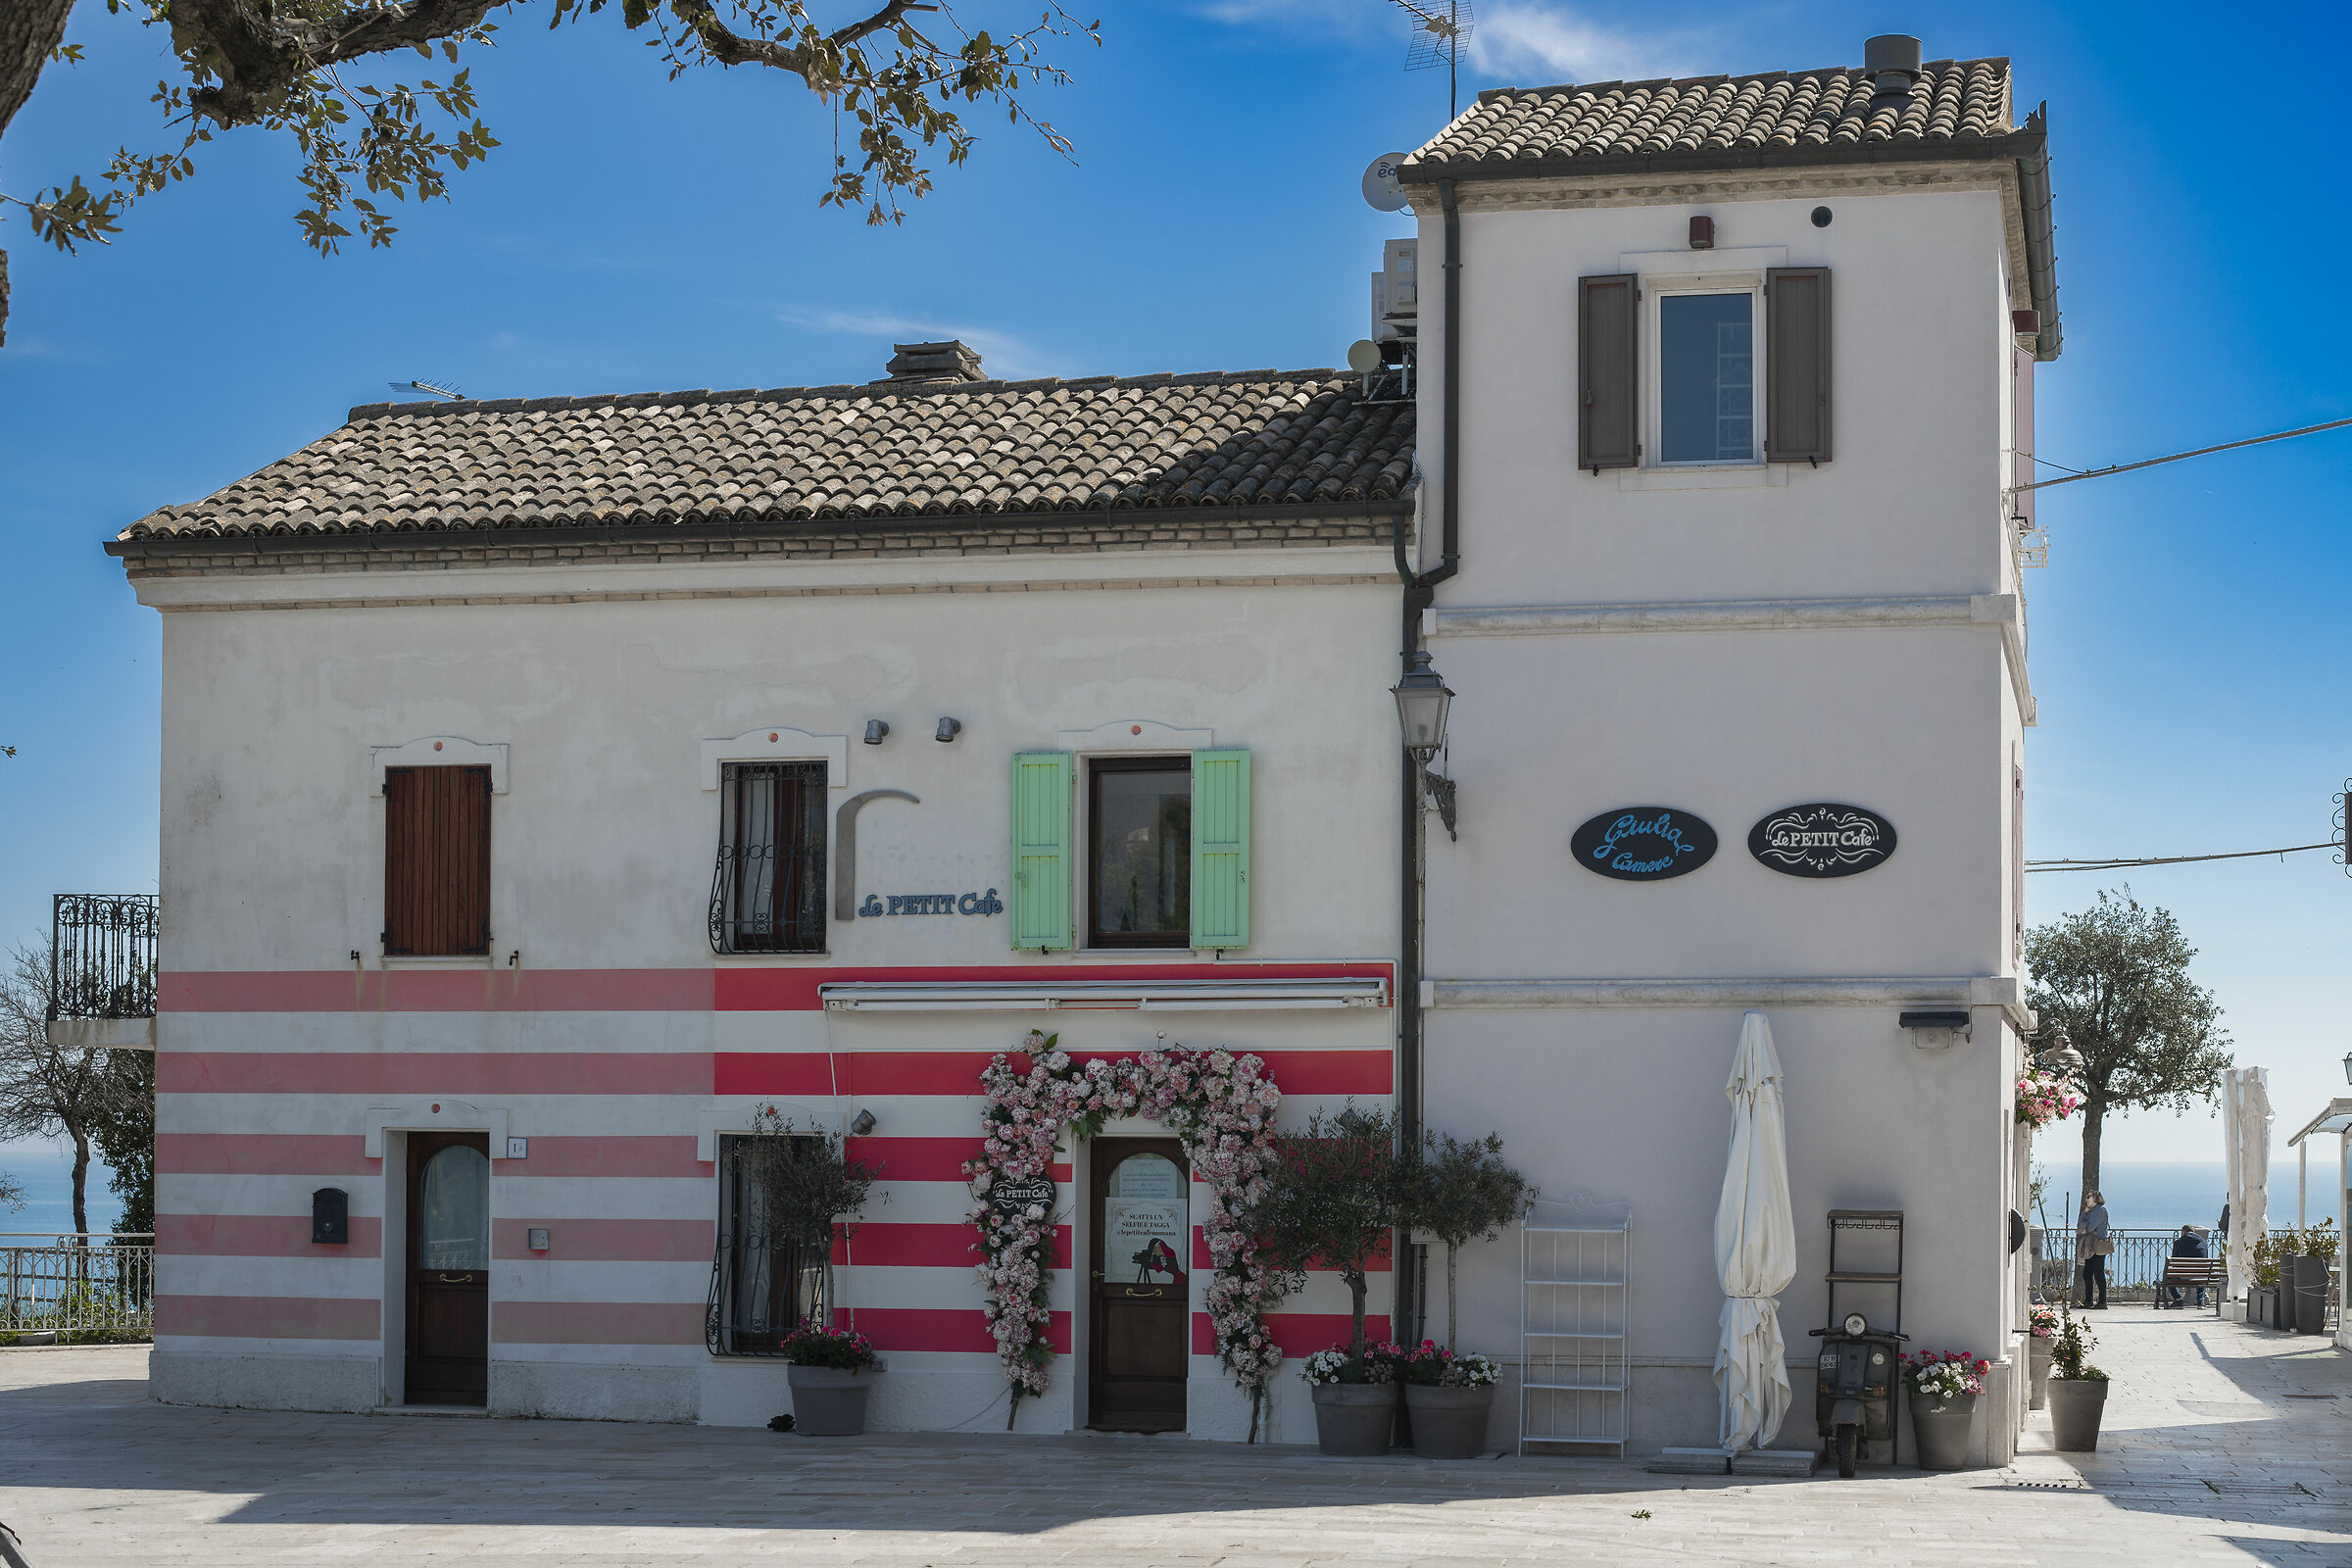 Petit Café, Petit Village. Numana (Italy)...